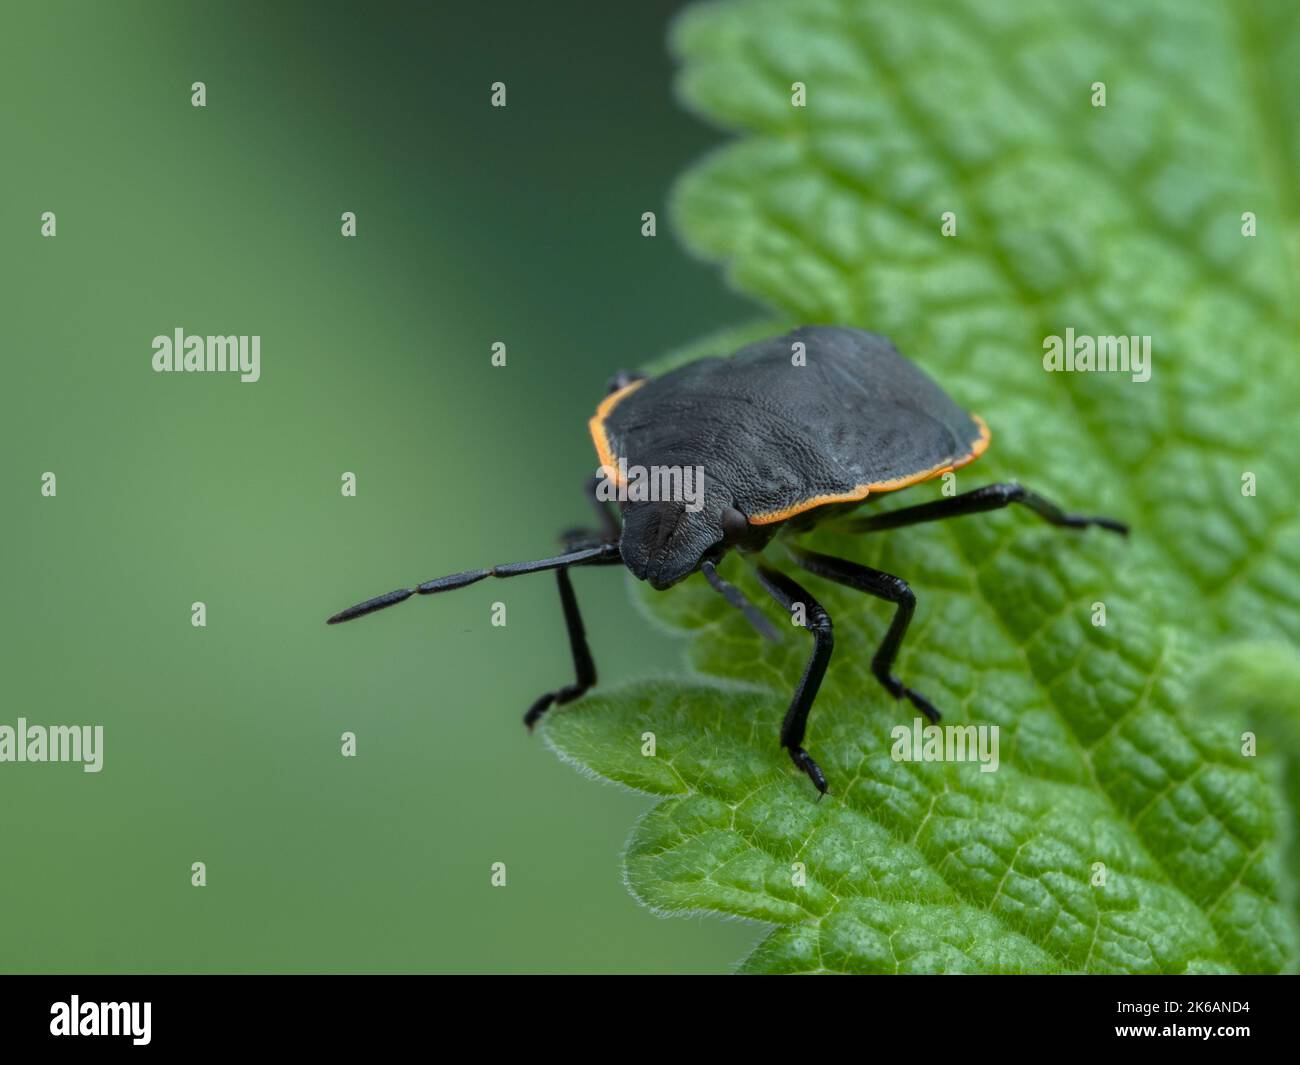 an immature conchuela bug, Chlorochroa ligata, on a green leaf, facing the camera Stock Photo